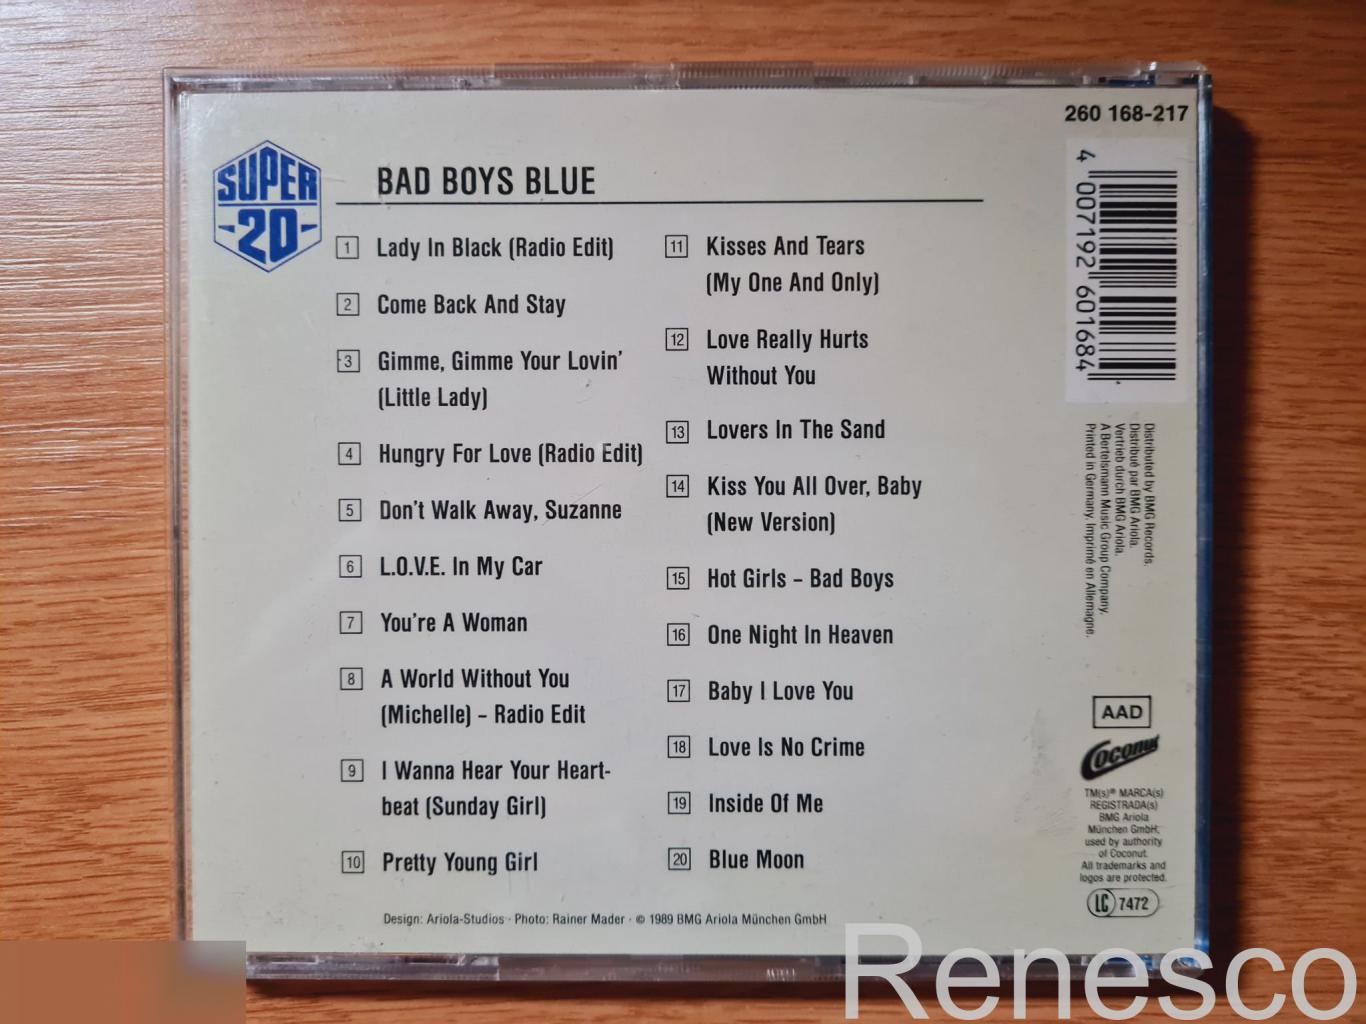 Bad Boys Blue ?– Super 20 (Germany) (Repress) (blue case) 1